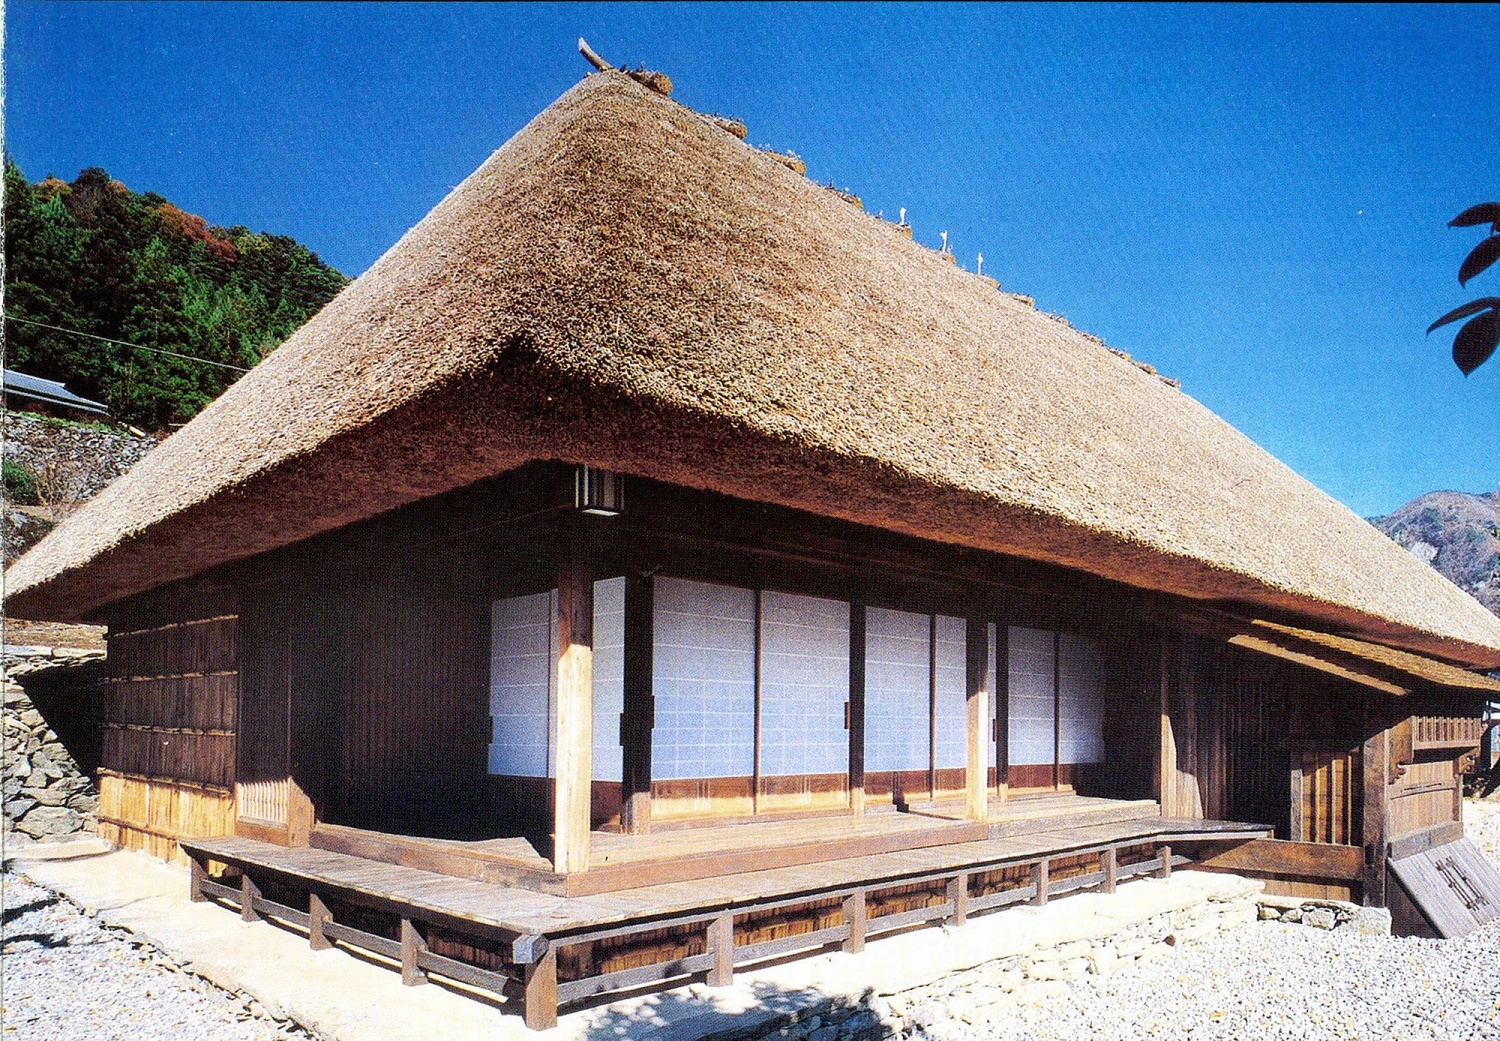 House of the Kimuraの画像1